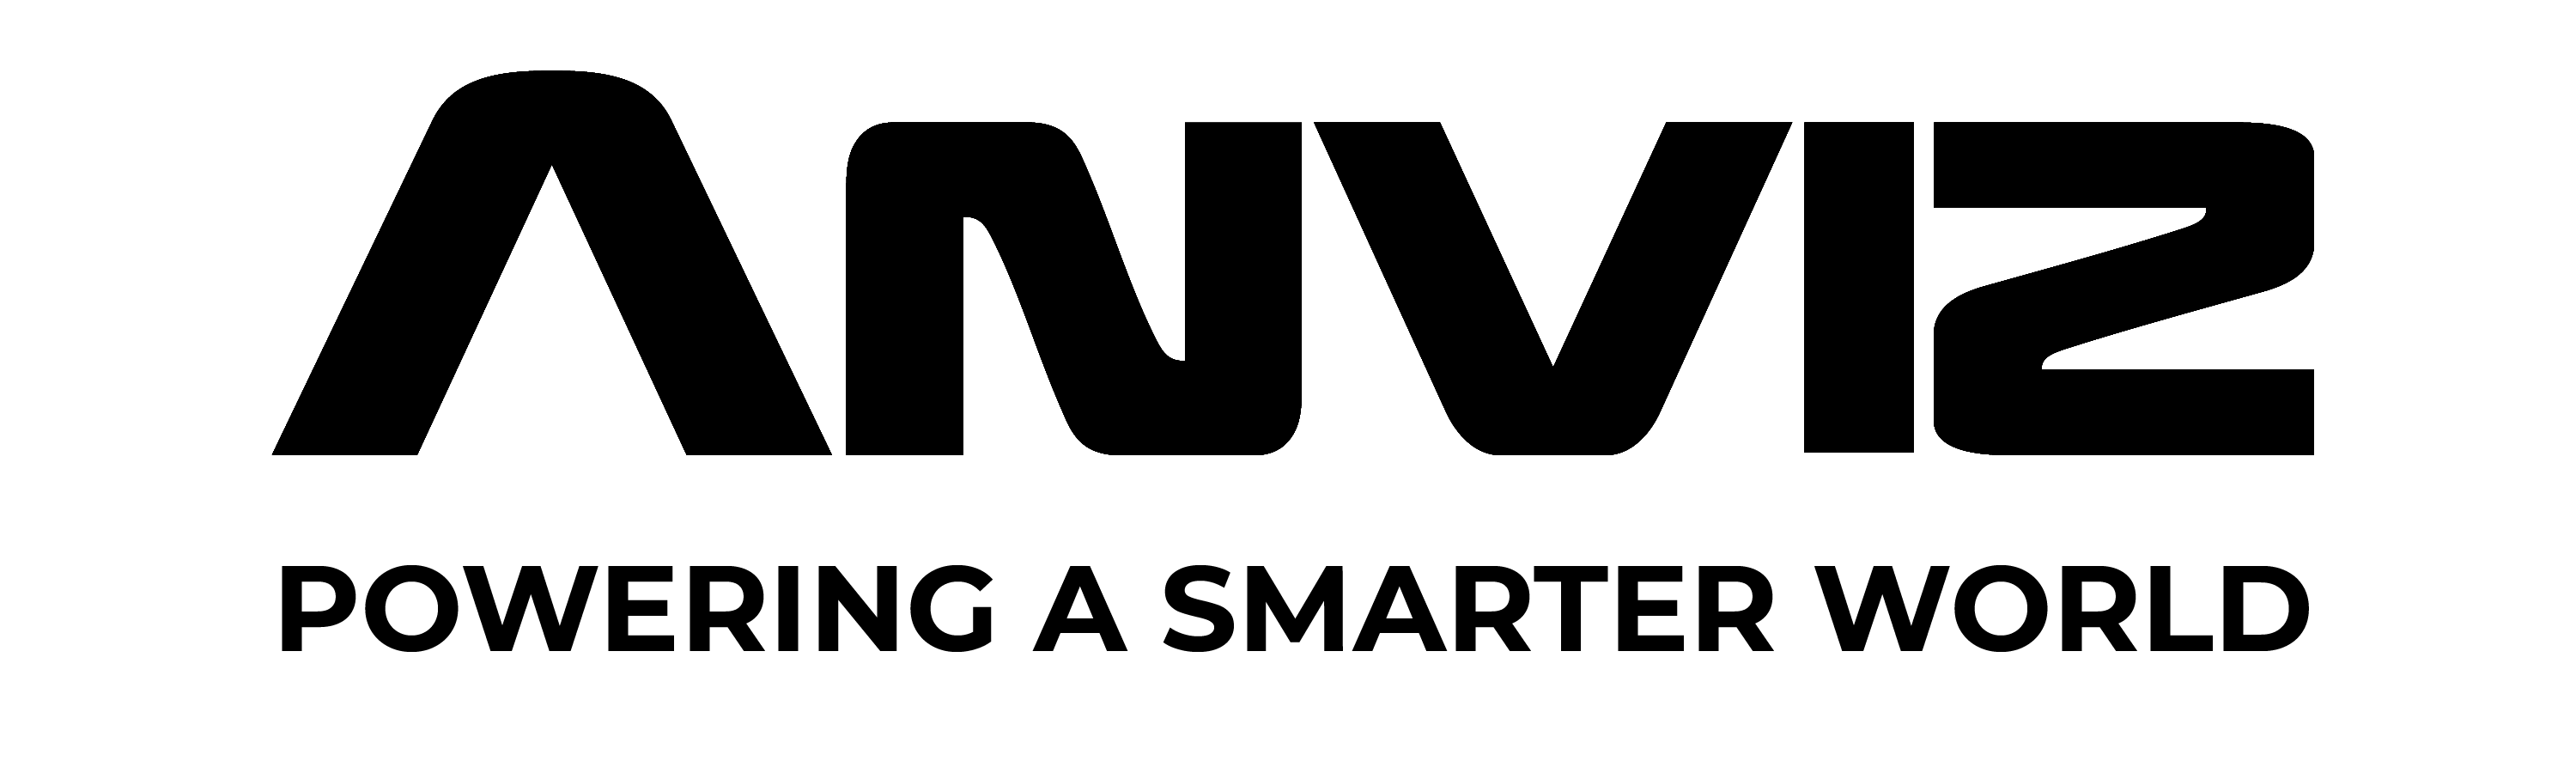 Anviz-logo